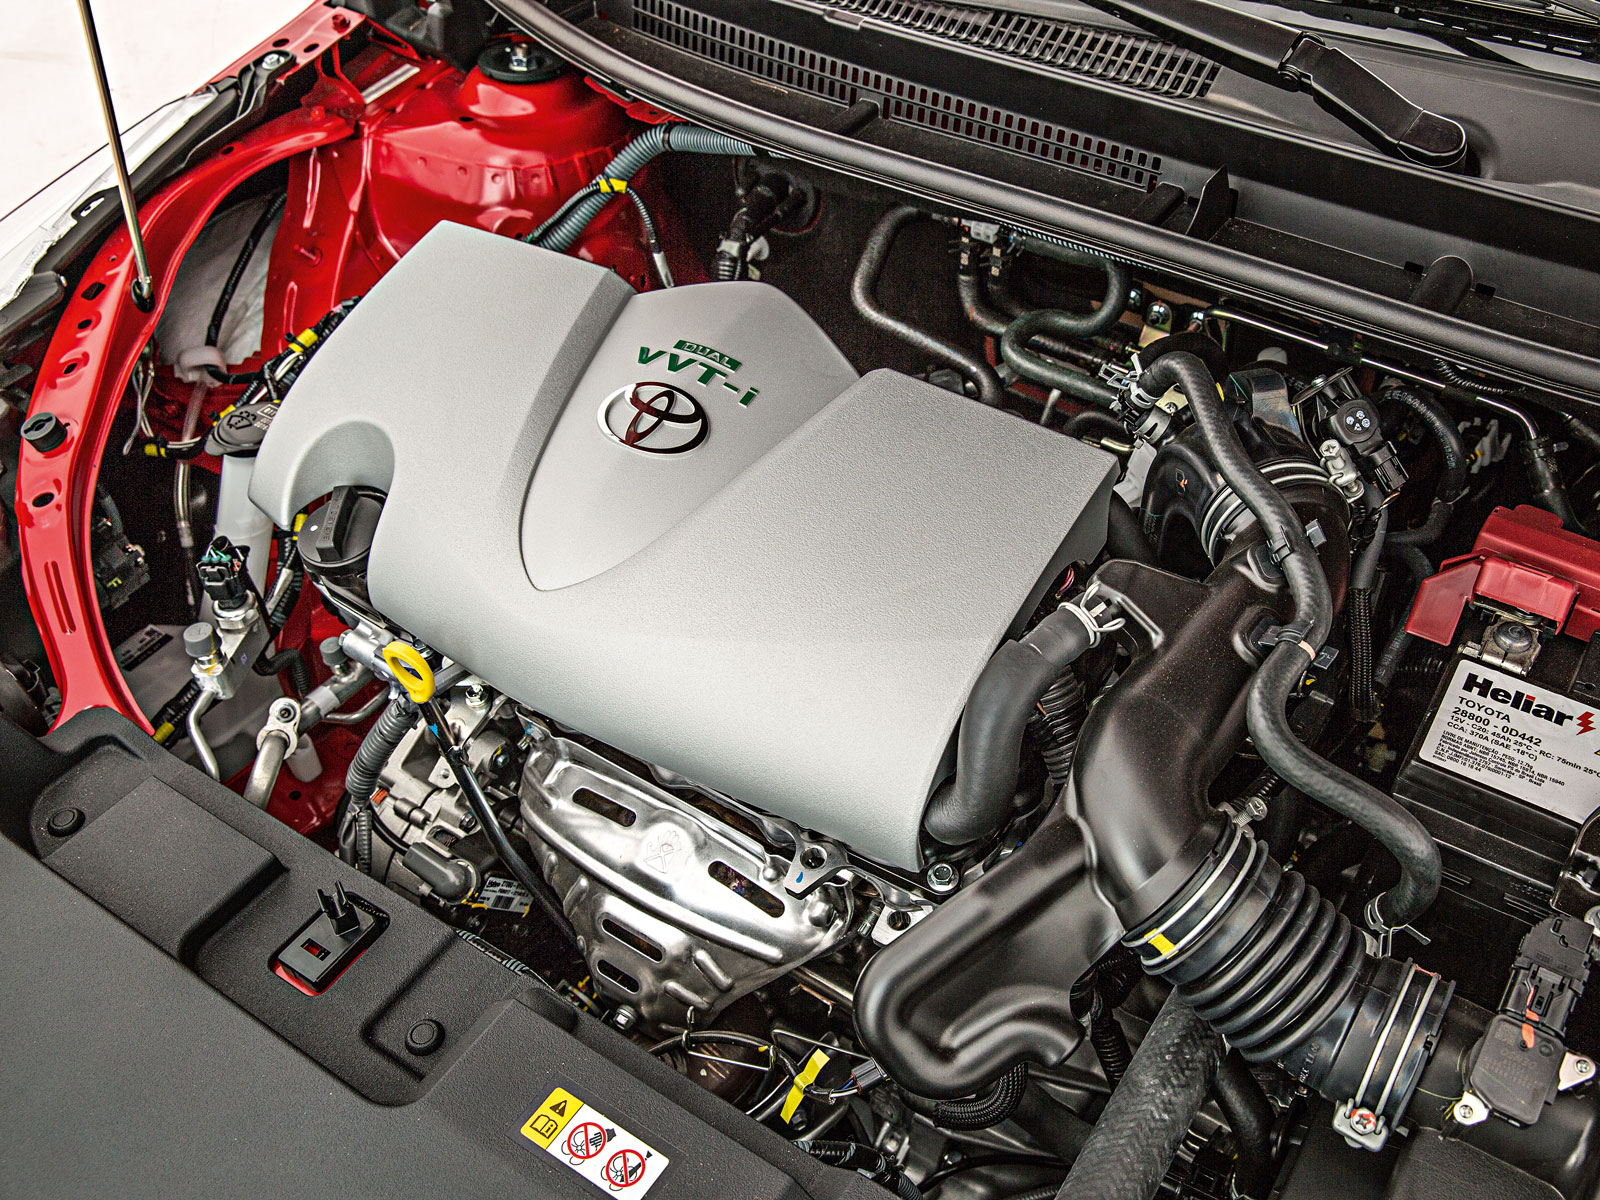 Teste Toyota Yaris hatch XLS, atrasado e tecnológico